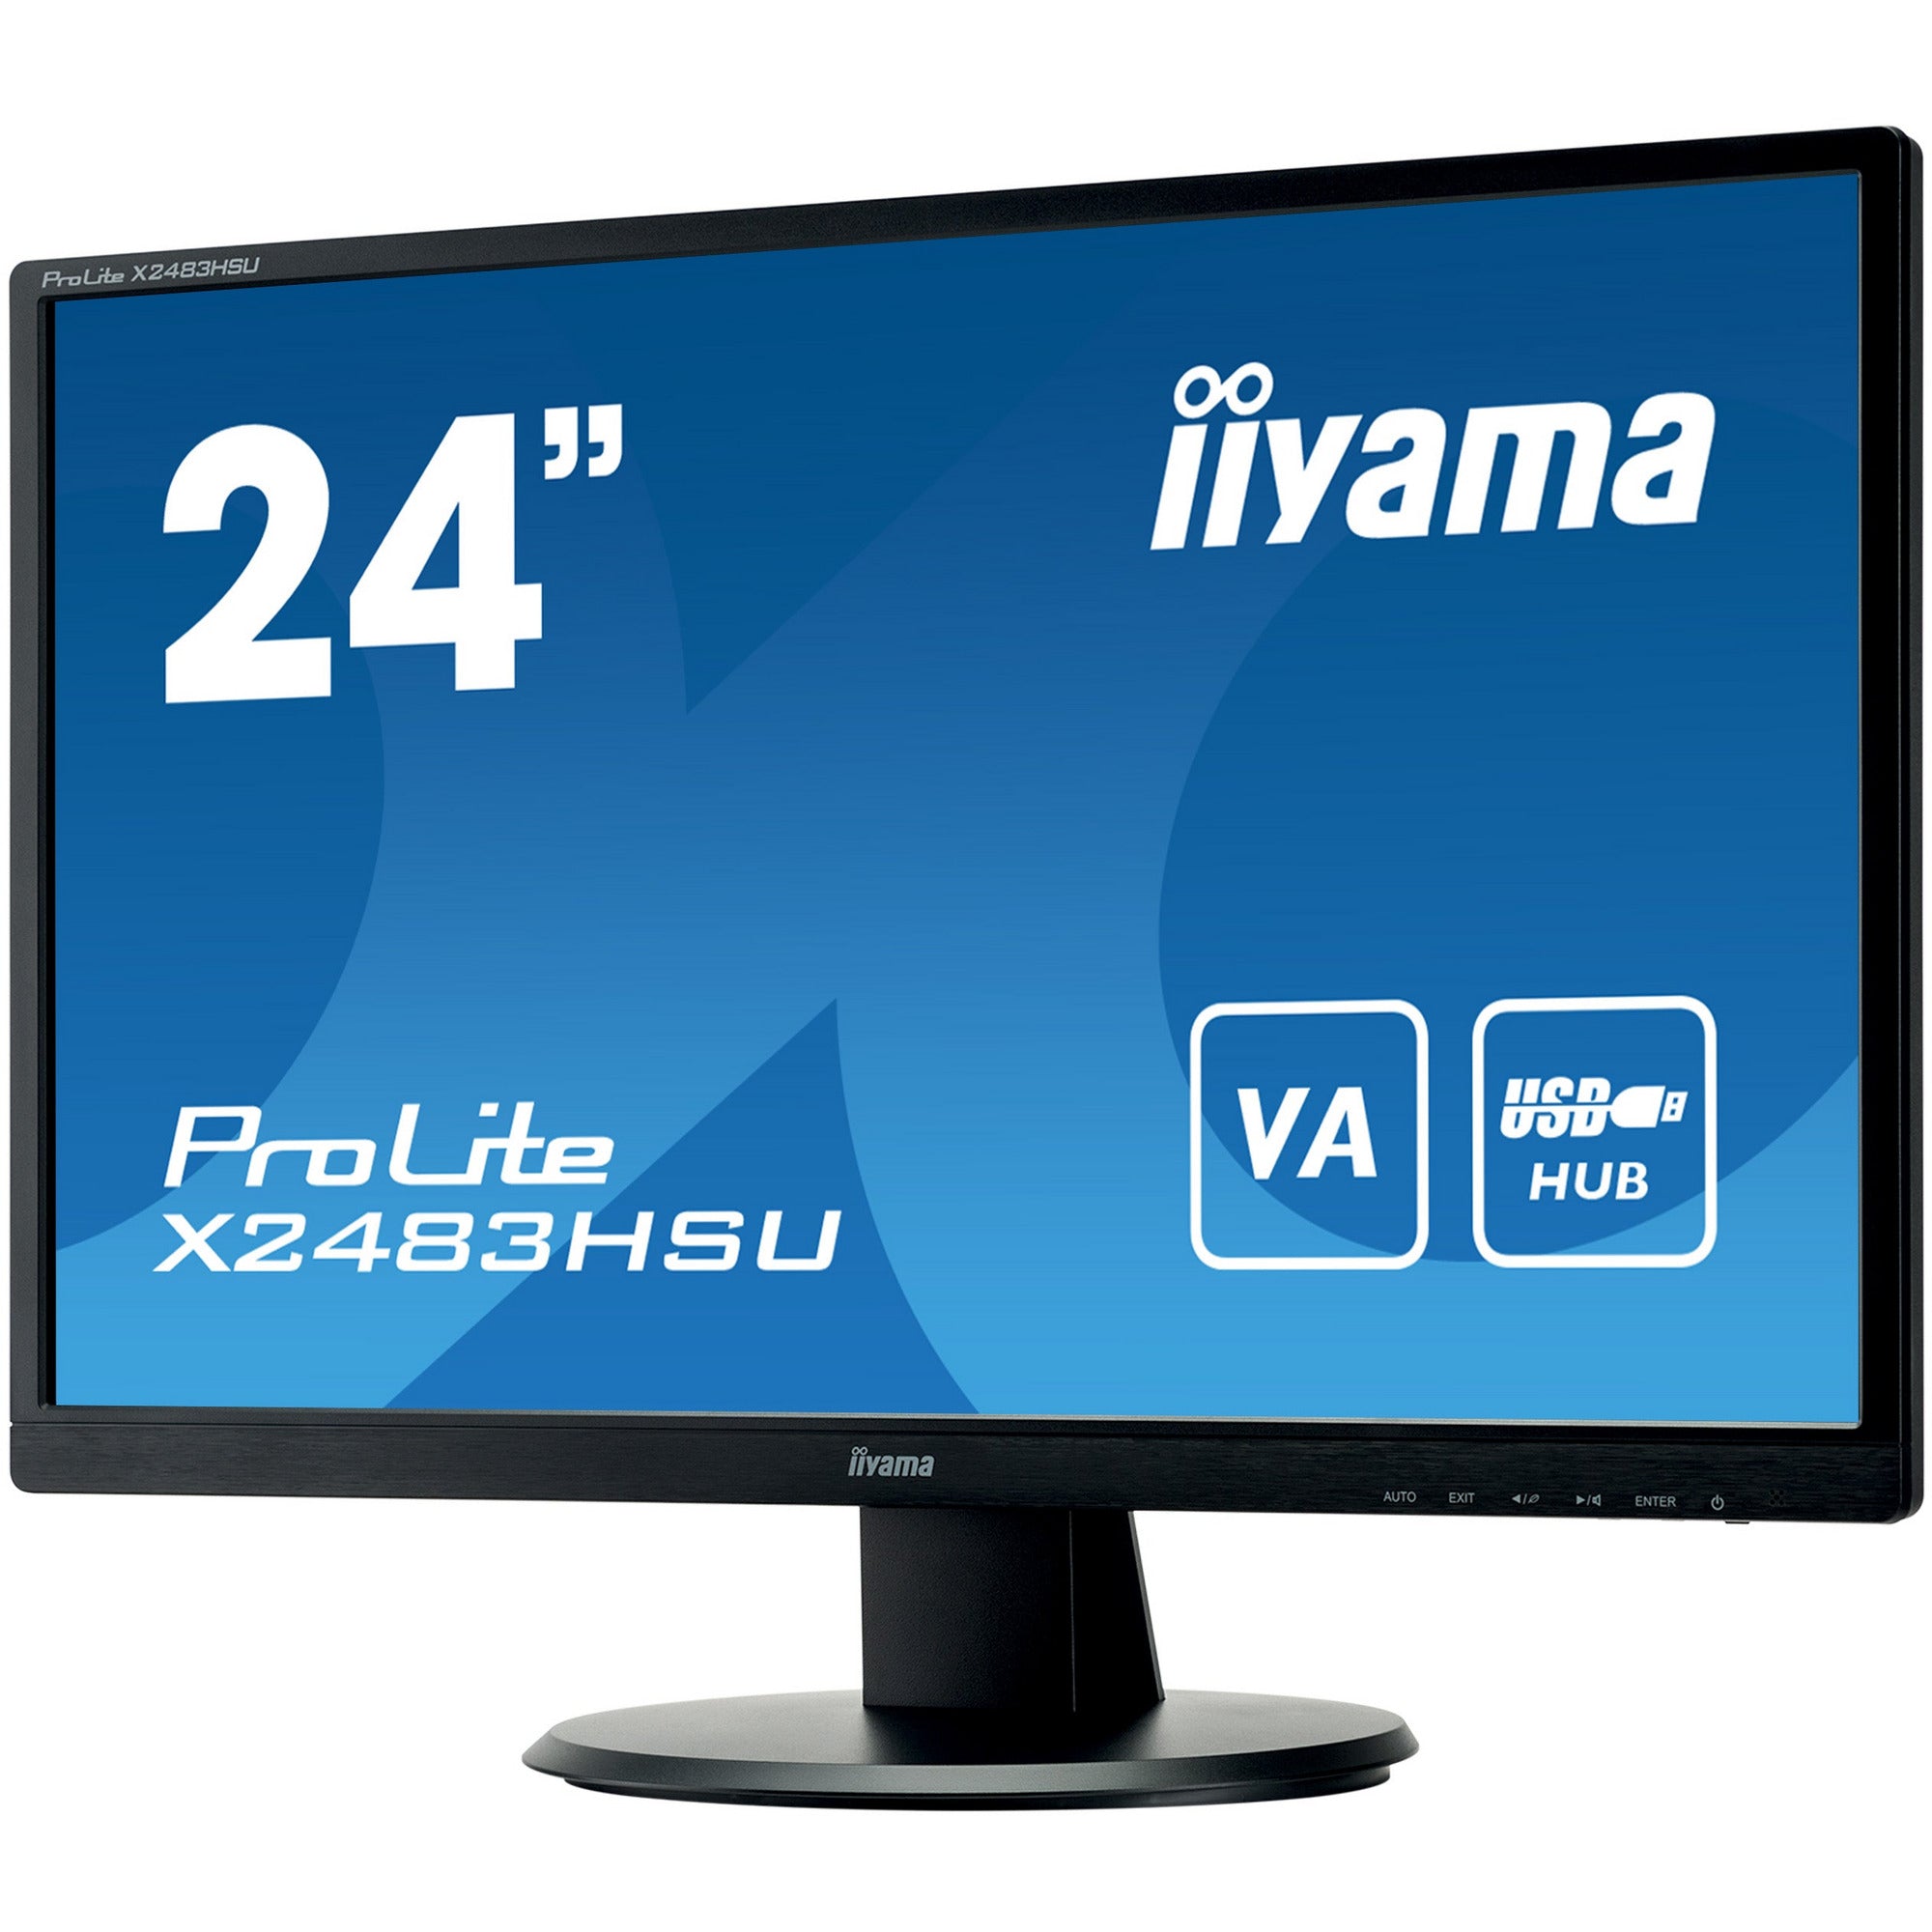 iiyama ProLite X2483HSU-B5 24" LED Display